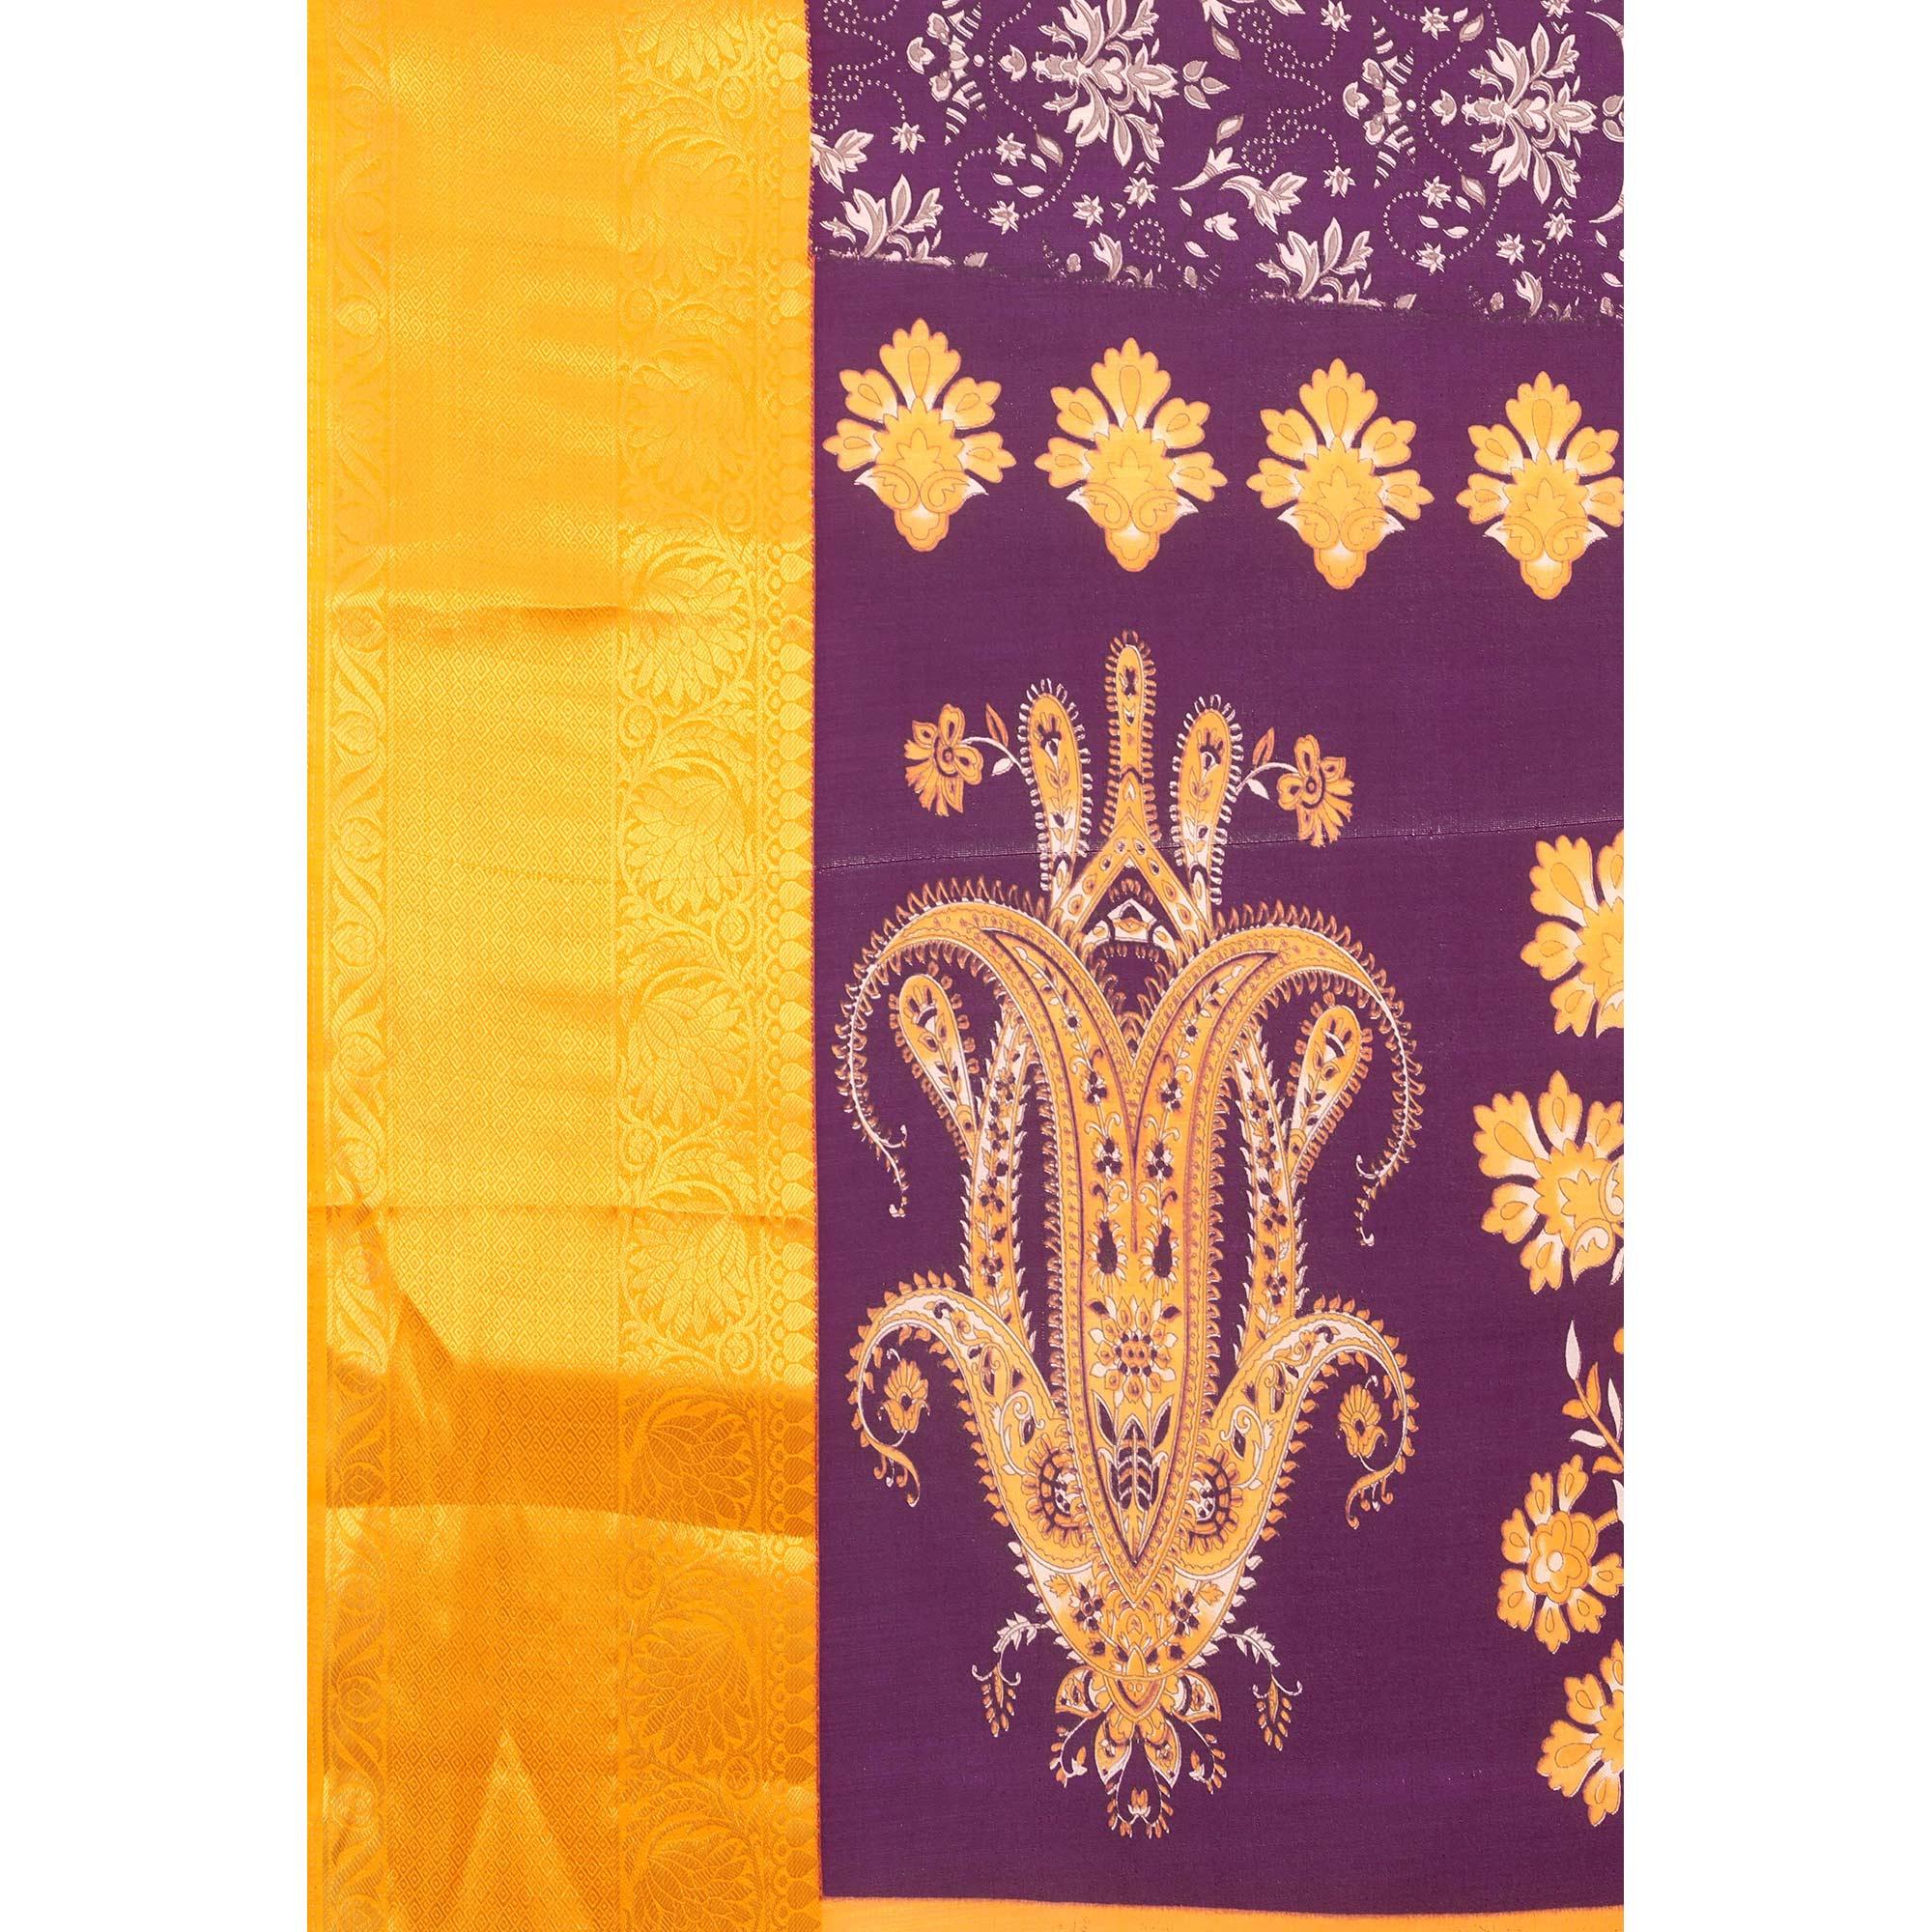 Purple Festive Wear Kalamkari Printed Chanderi Silk Saree With Zari Weaving Border - Peachmode